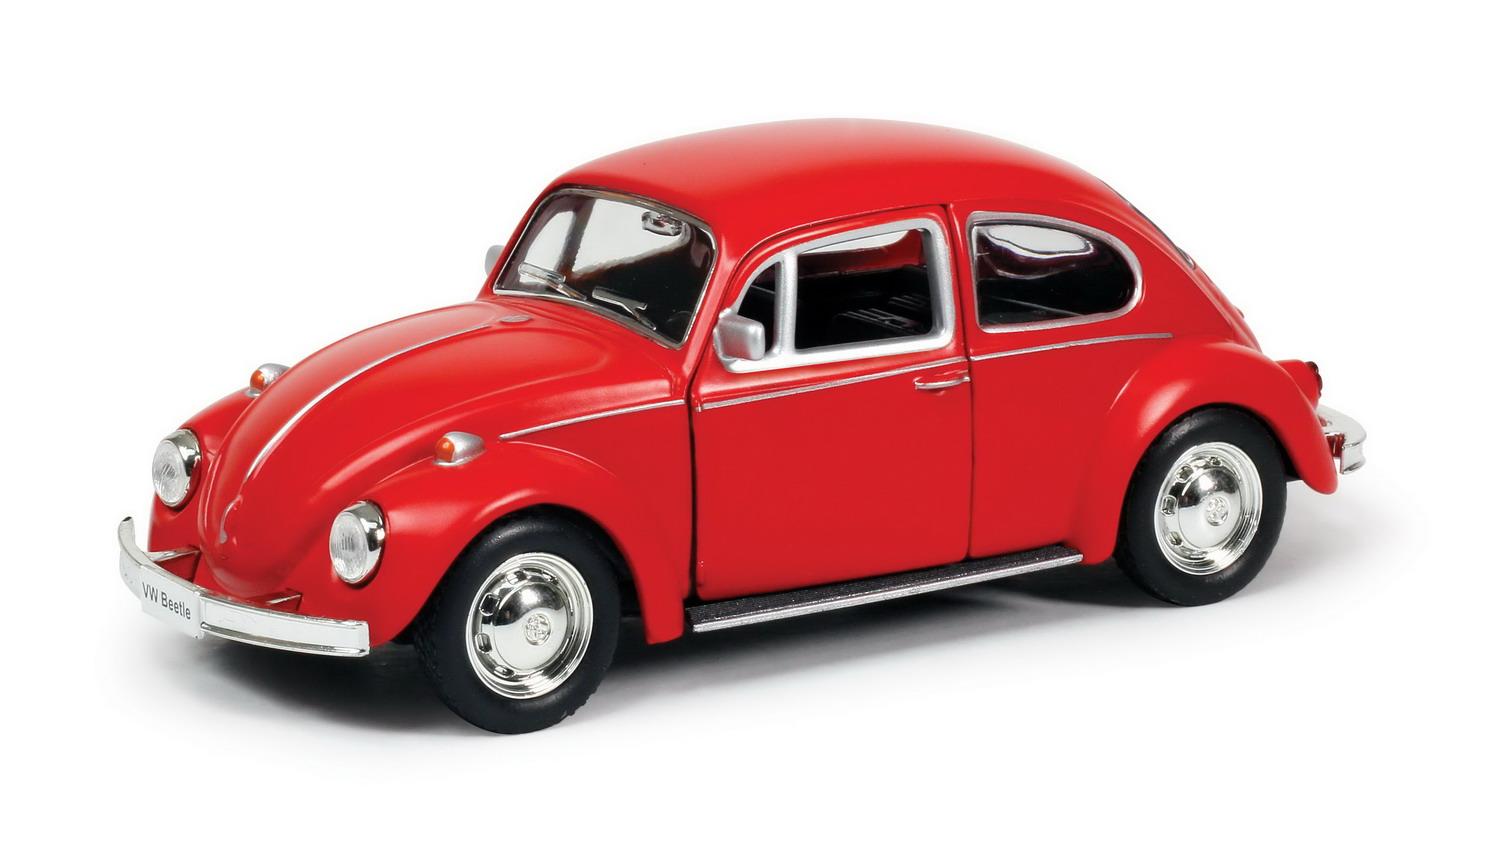 Машина металлическая RMZ City 1:32 Volkswagen Beetle 1967, красный матовый цвет 3 buttons modified filp folding remote key shell case for vw volkswagen caddy eos golf jetta beetle polo up tiguan touran